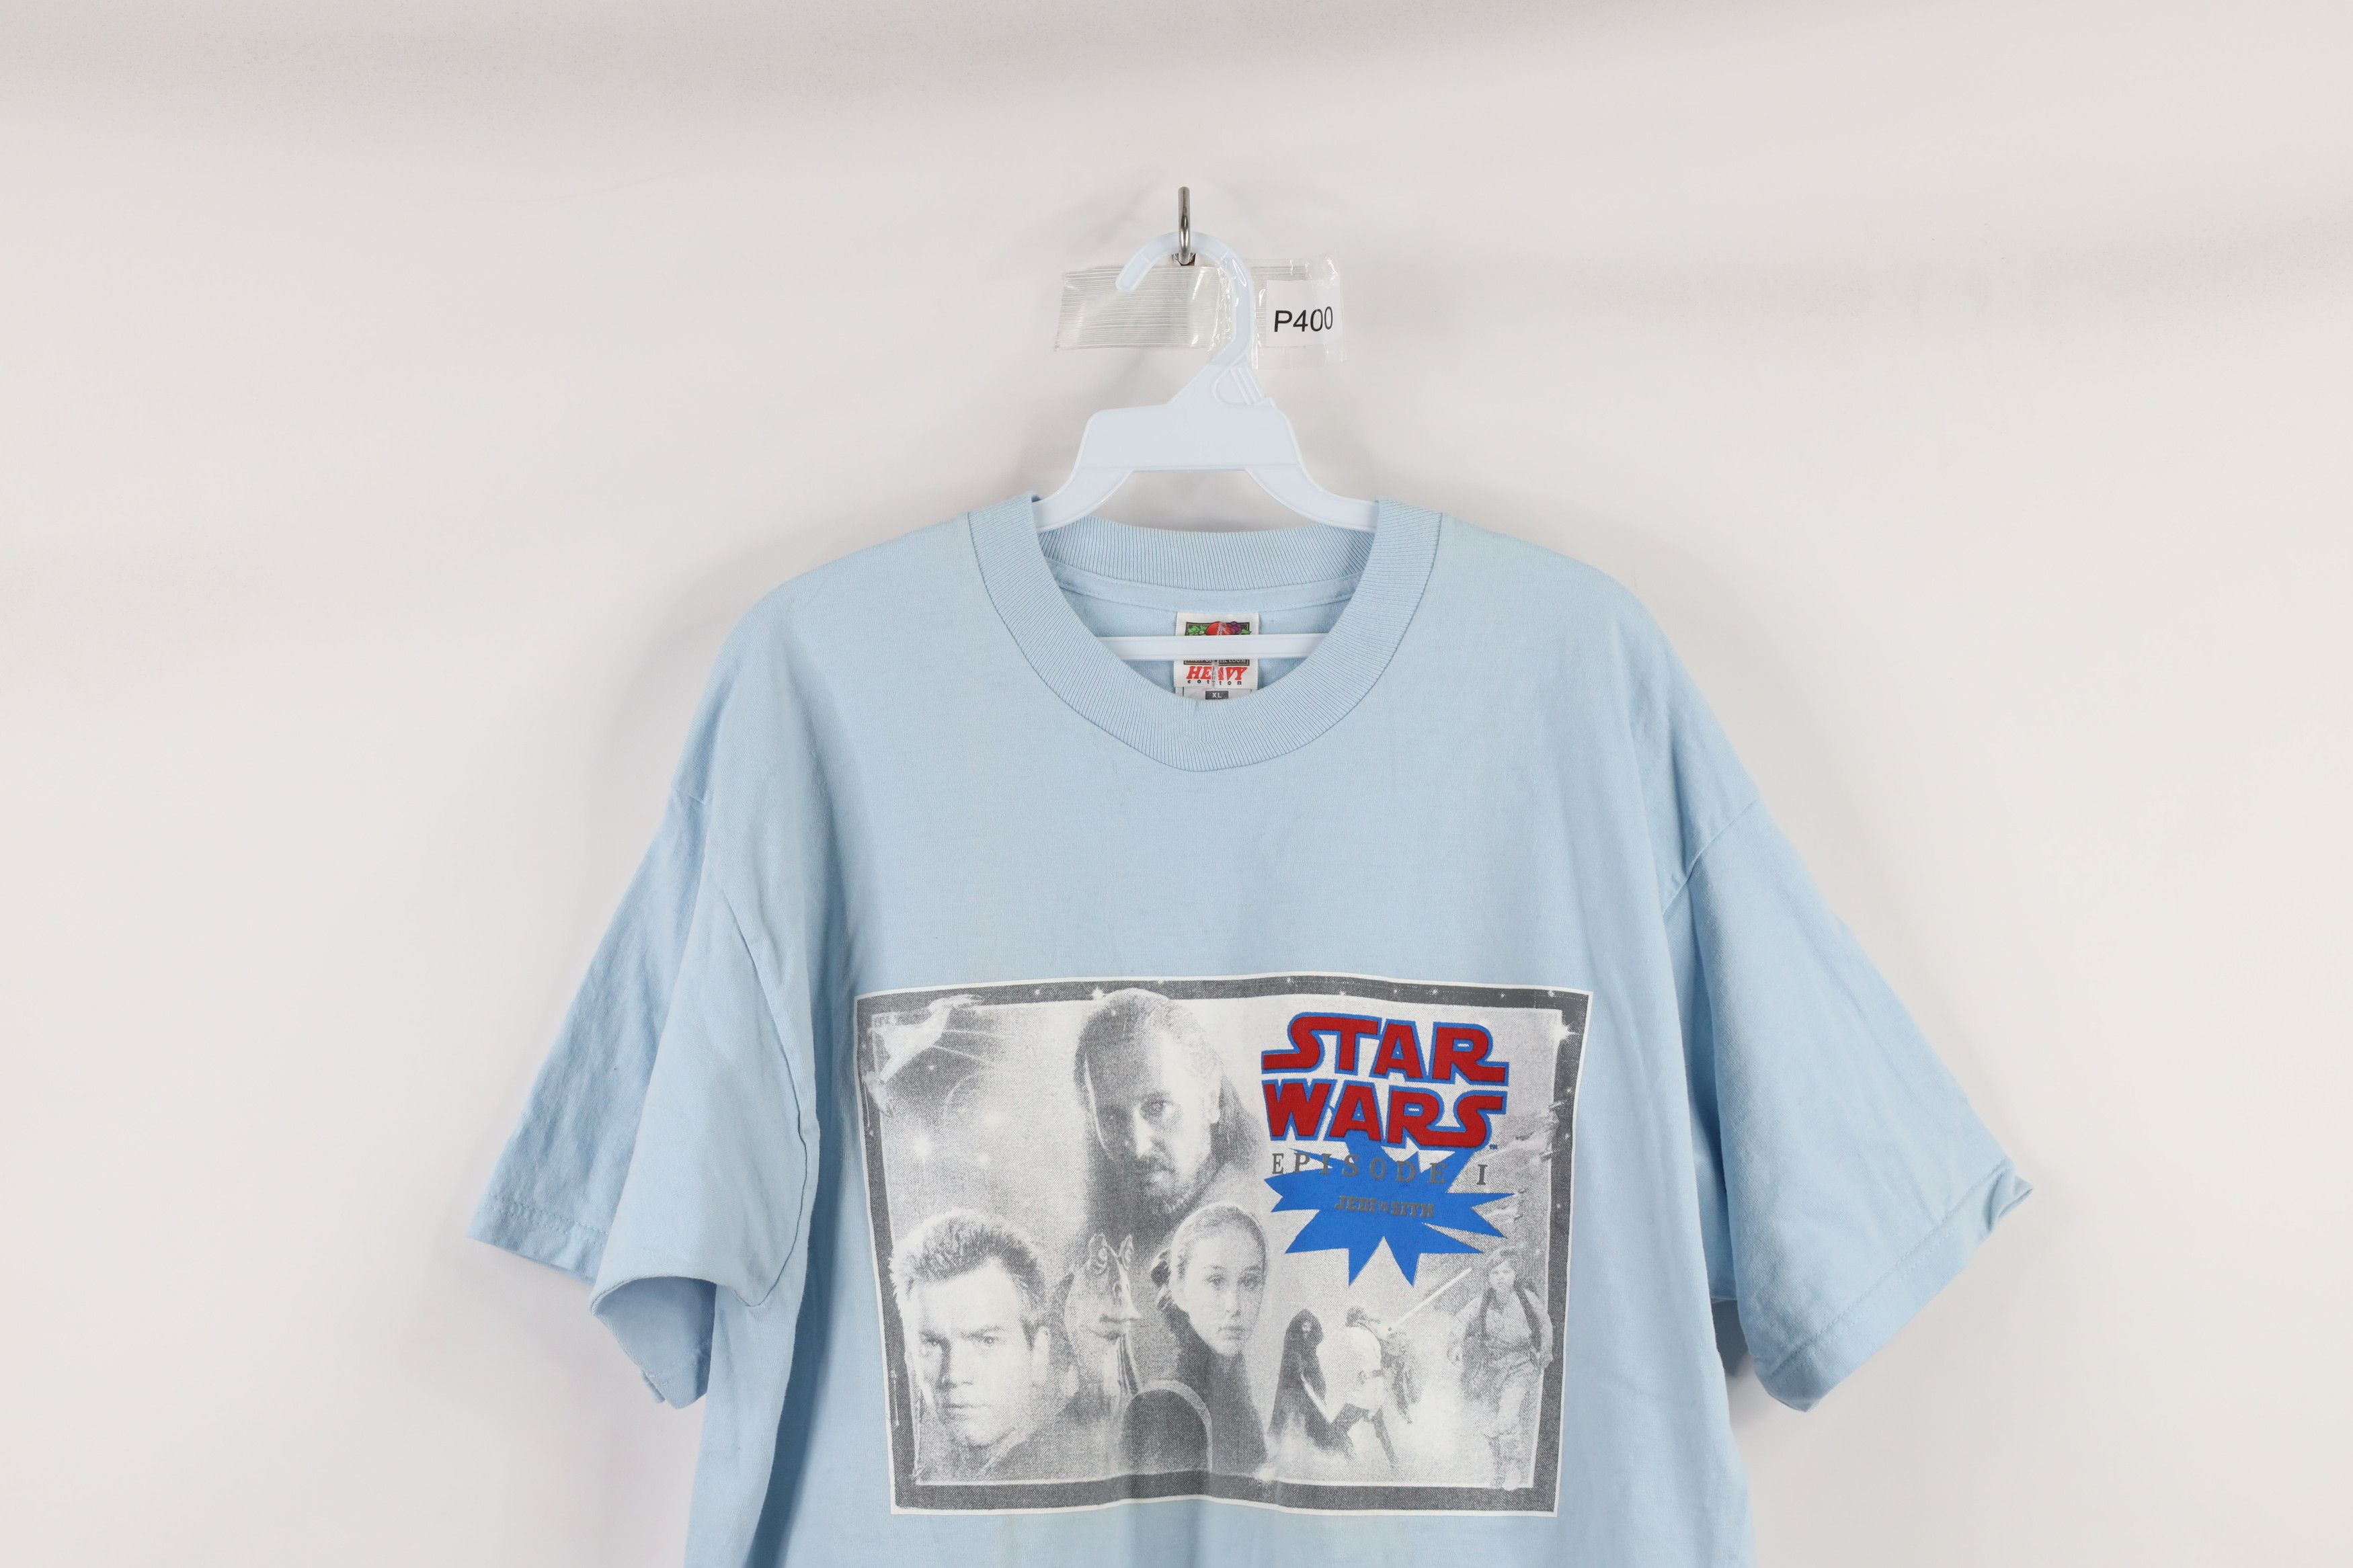 Vintage Vintage 90s Wars Episode 1 Movie Promo T-Shirt Light Blu Size US XL / EU 56 / 4 - 2 Preview